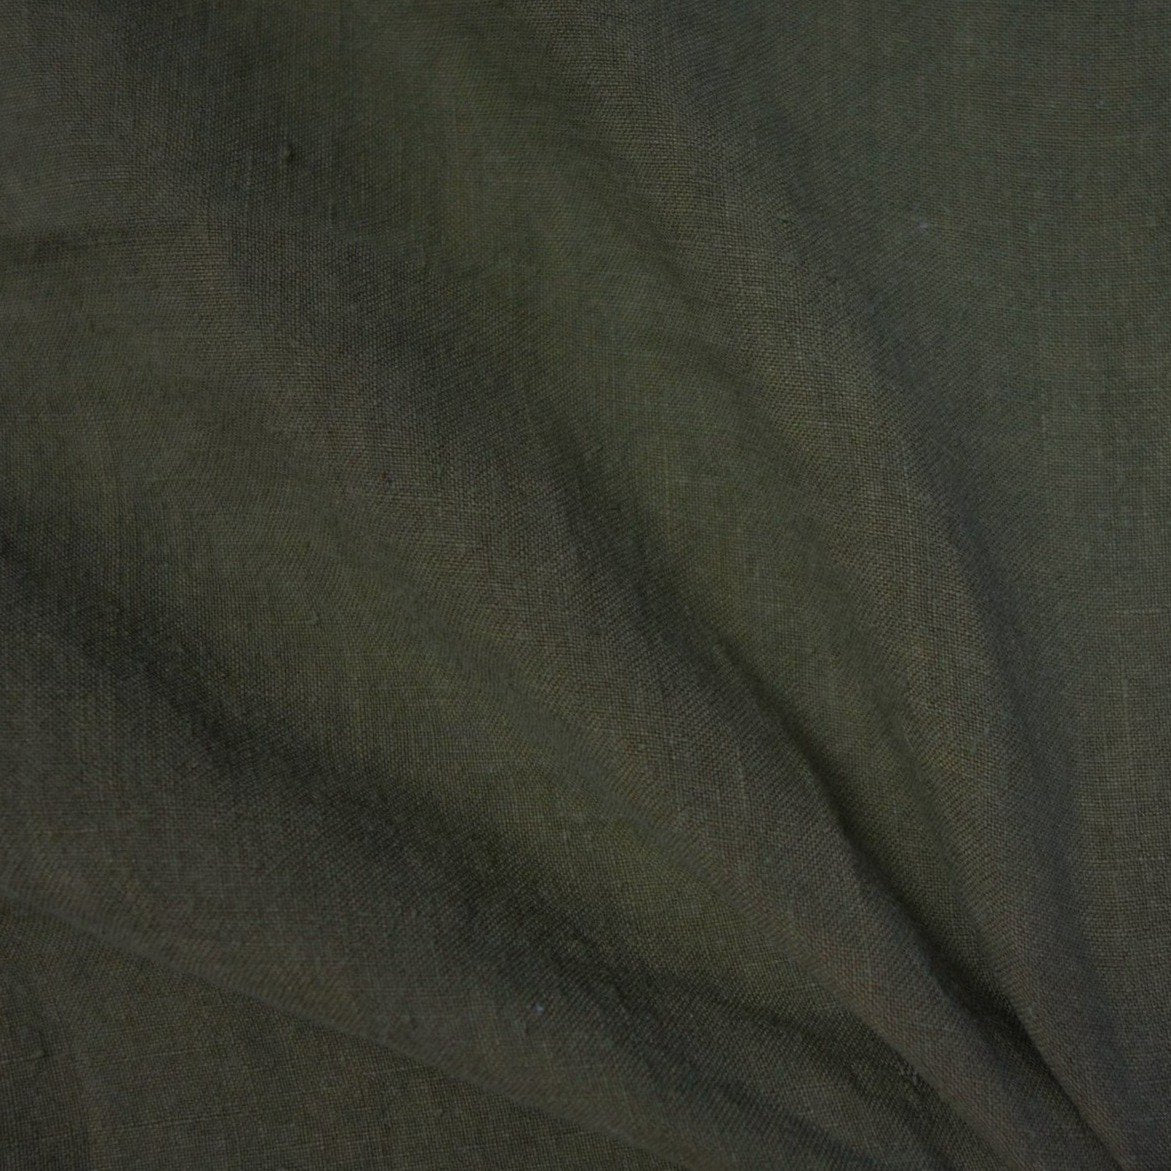 Ellis Washed Linen Olive ½ yd-Fabric-Spool of Thread